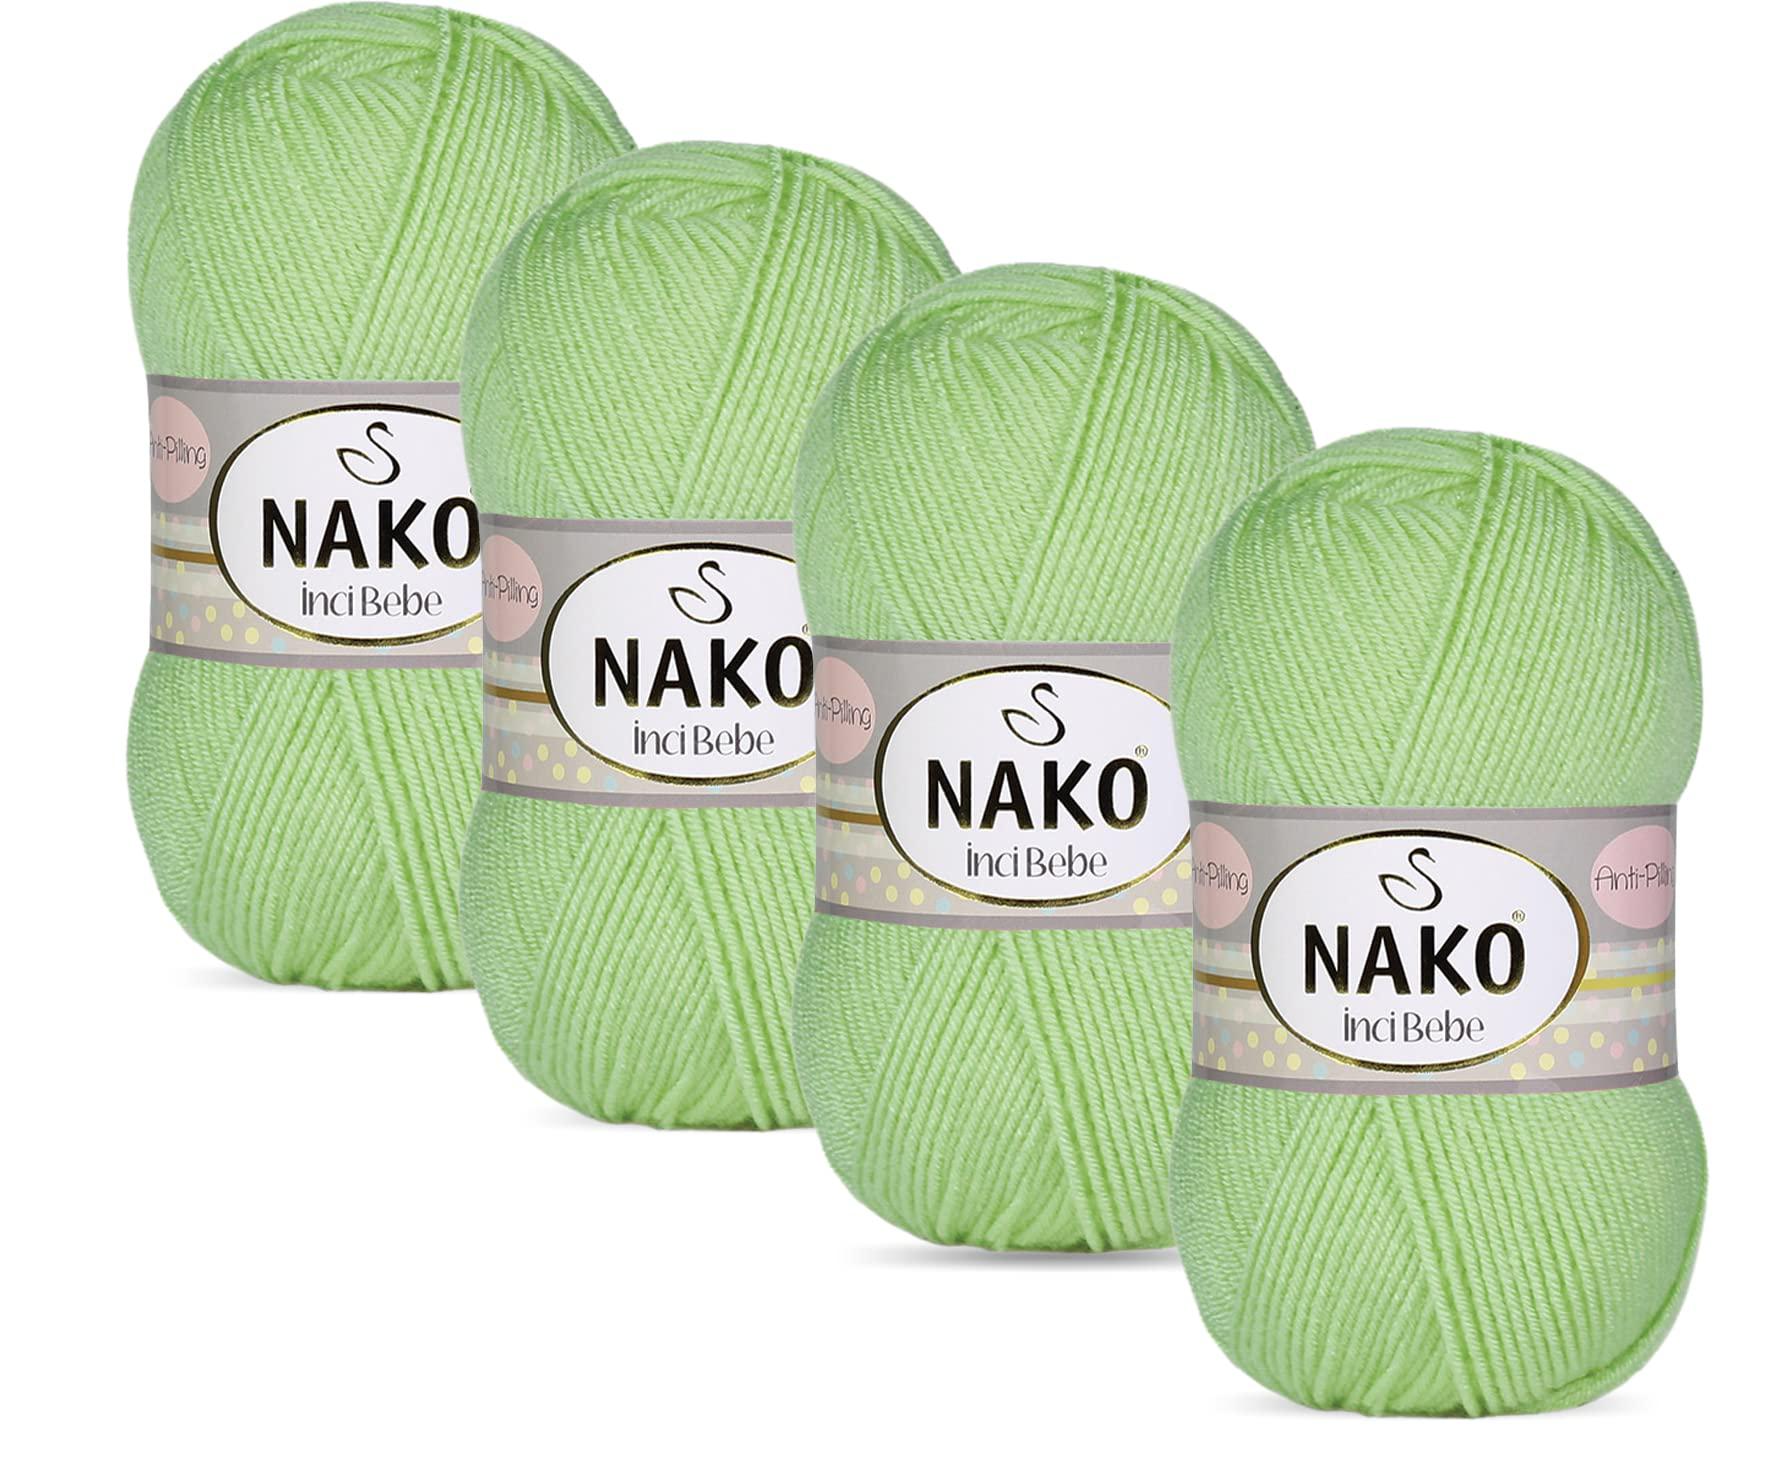 nako ?nci bebe,baby knitting yarn,(4balls) each skein(ball) 3.53 oz (100g),scarf, beret, booties, cardigan, you can safely us